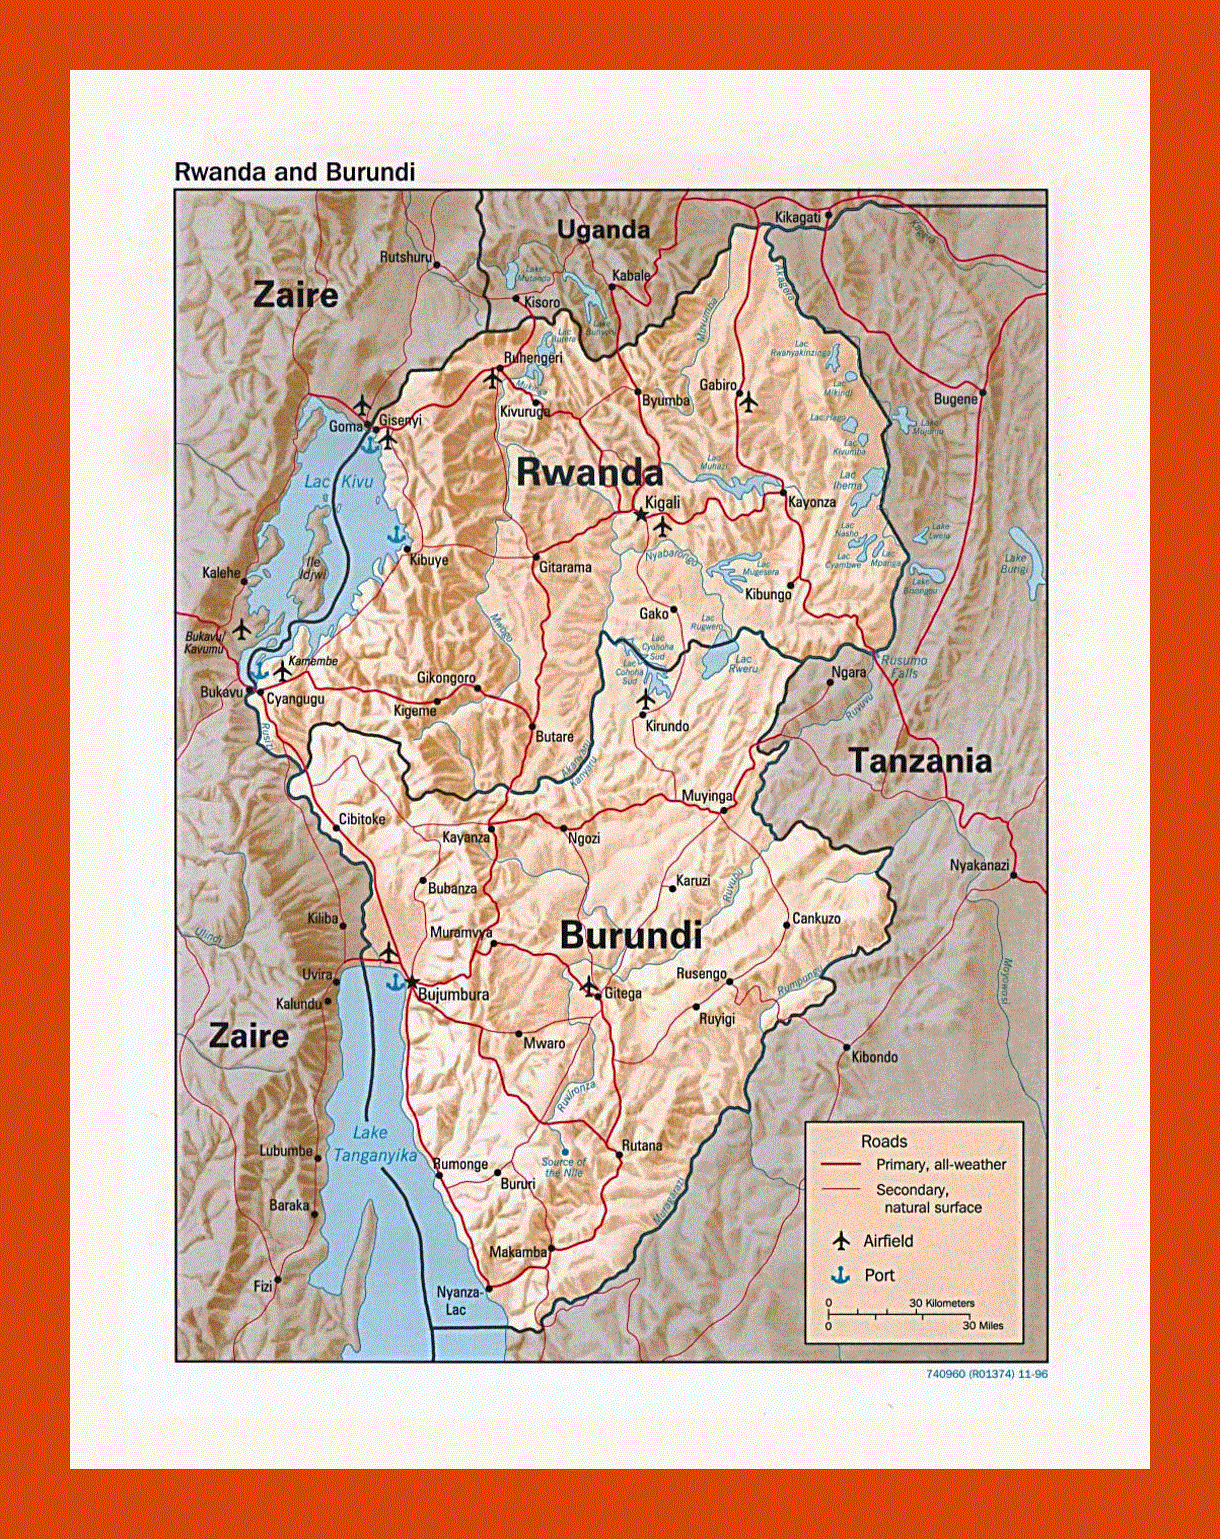 Political map of Rwanda and Burundi - 1996